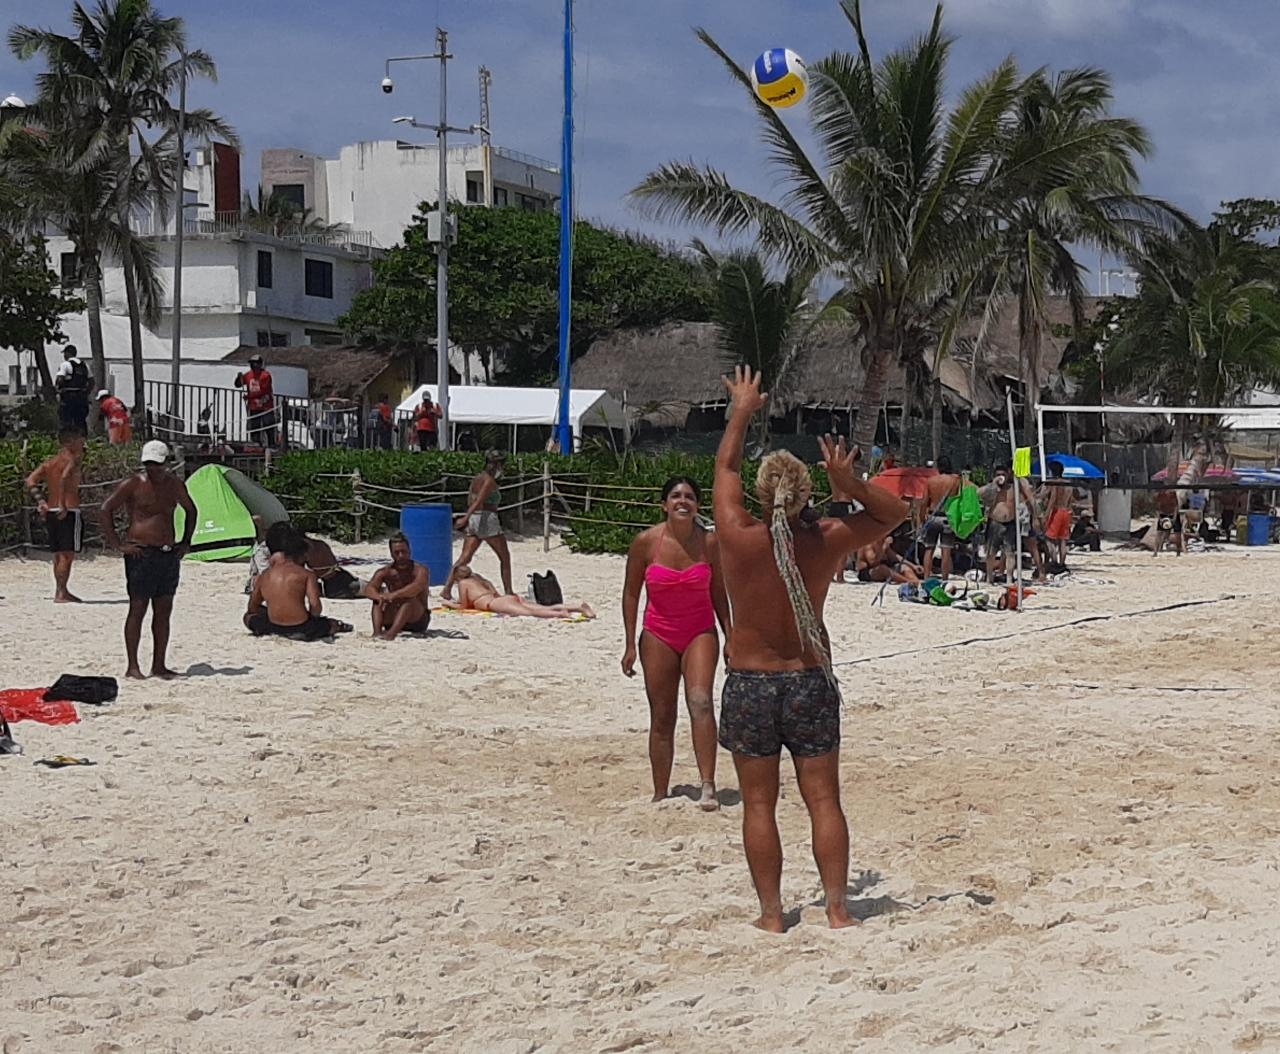 Hoteleros reducen sus tarifas para atraer turismo a Playa del Carmen